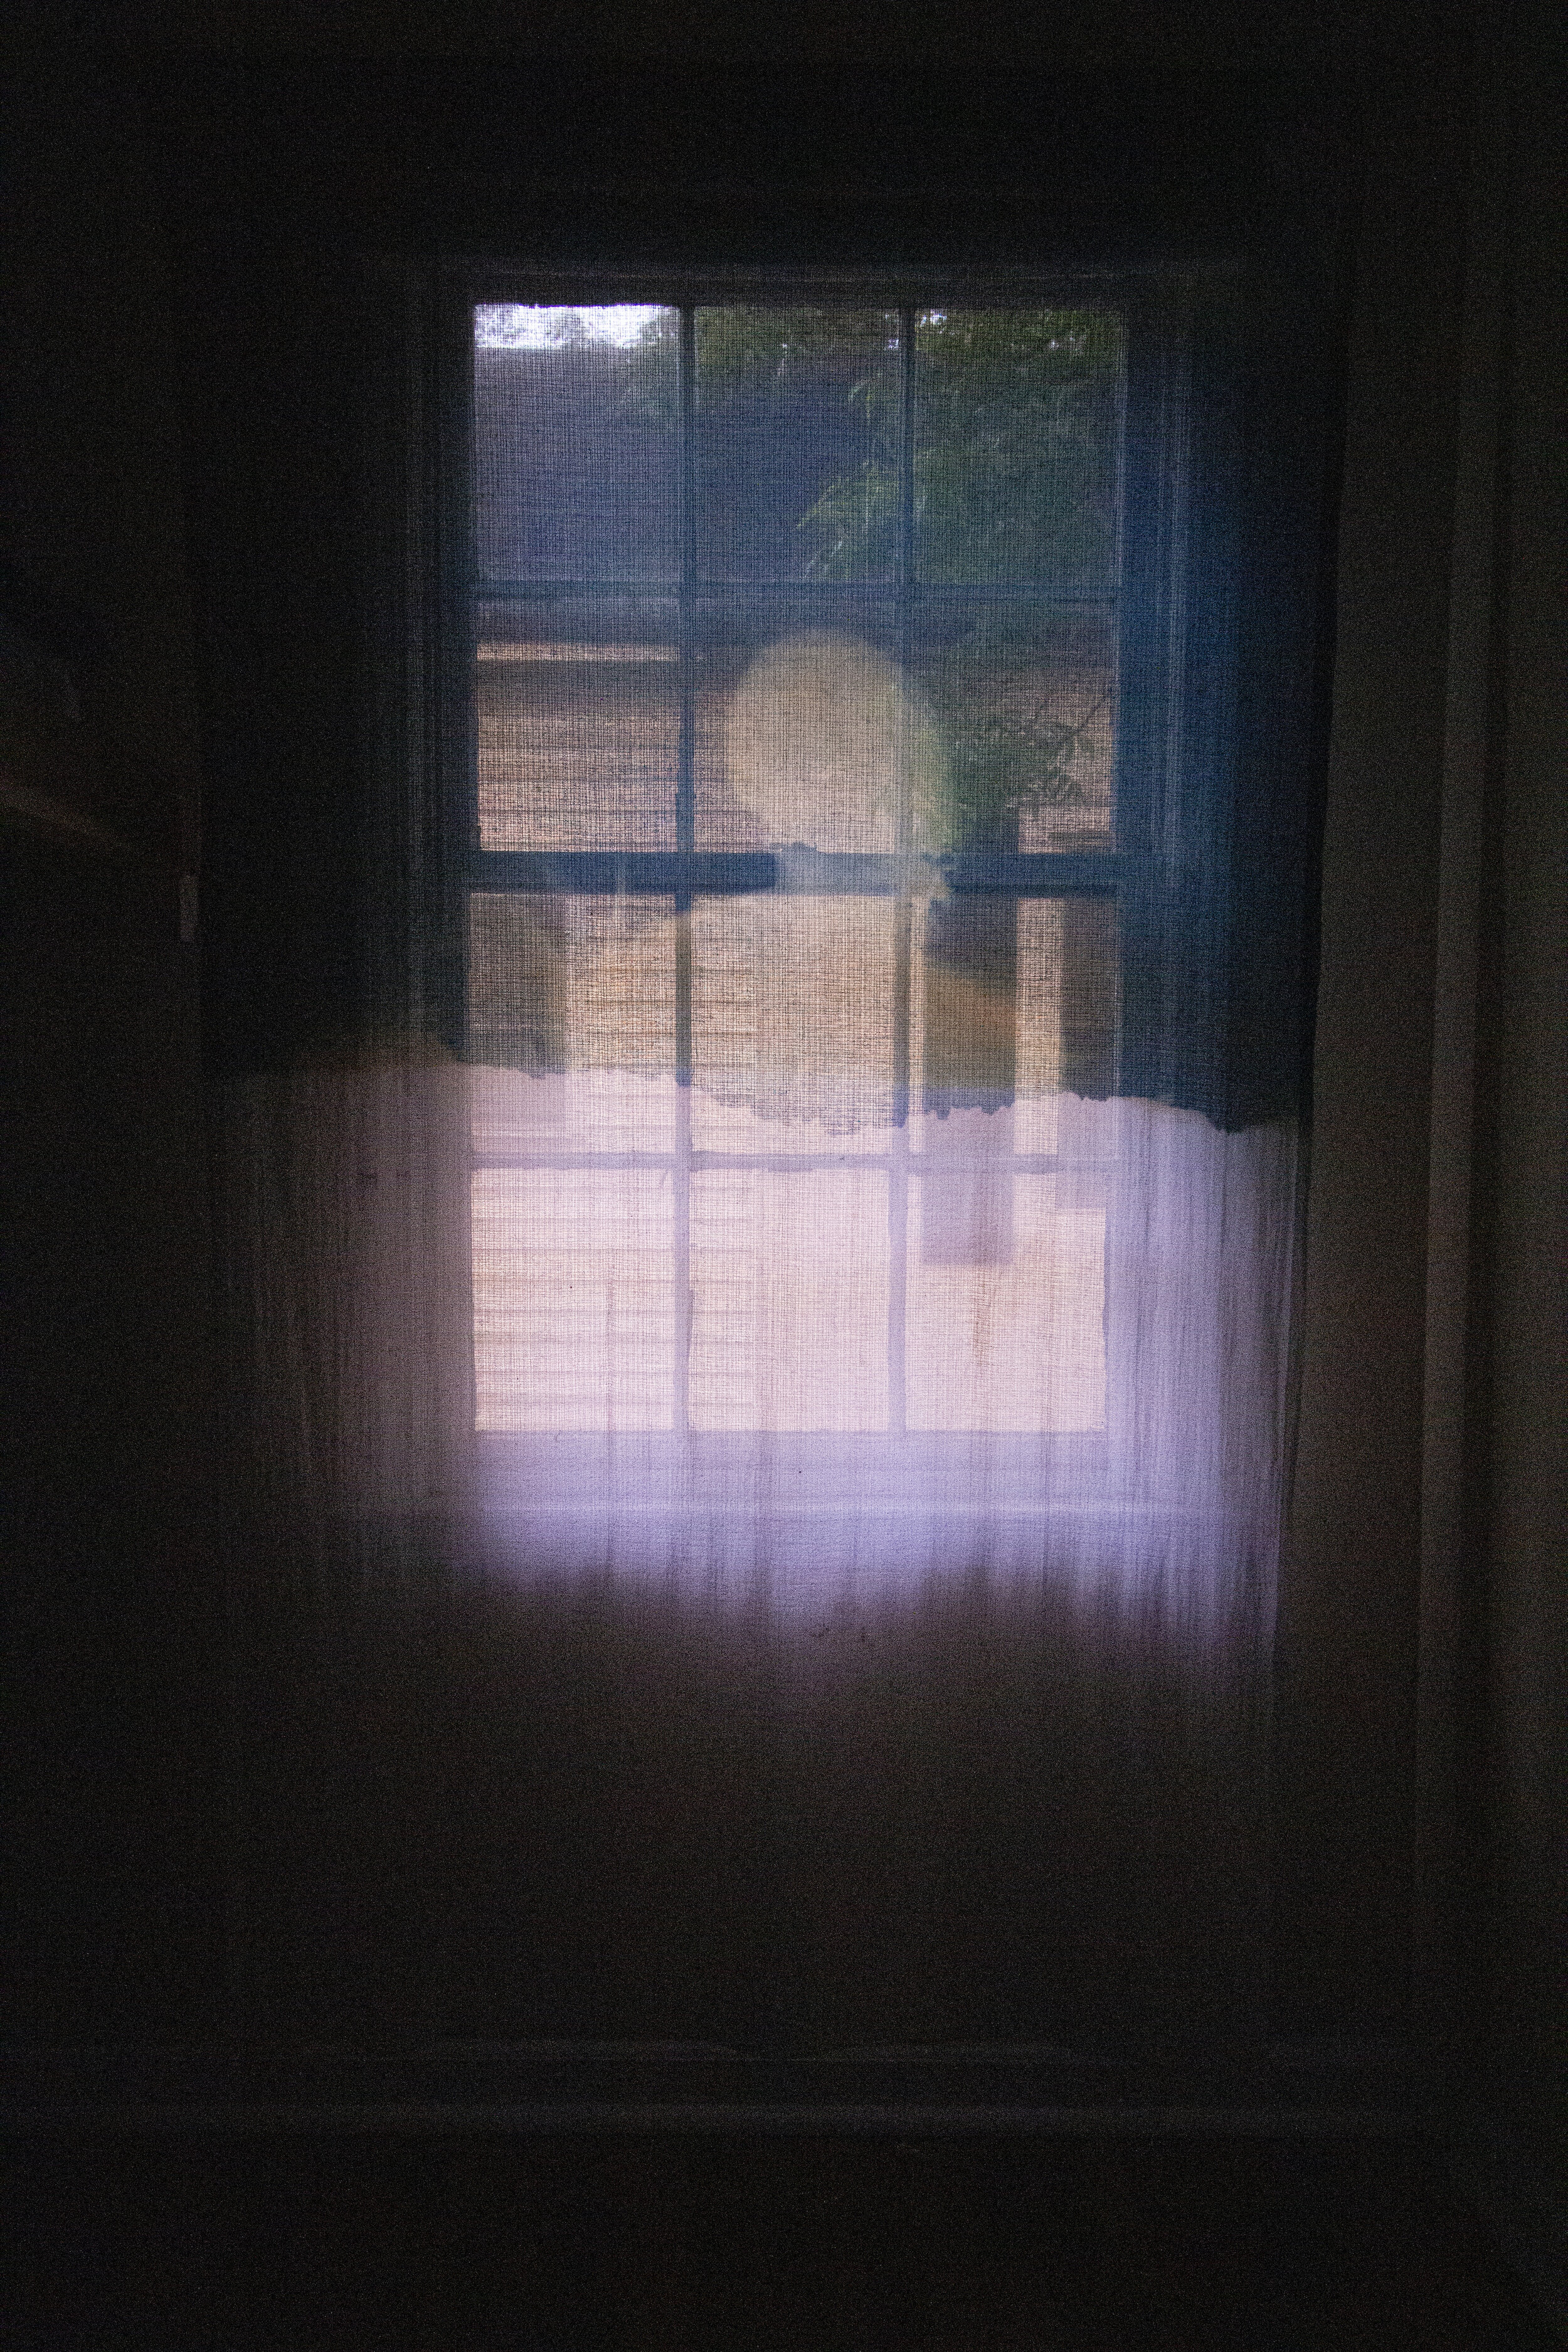 Sunrise [sunrise], 2020, cotton curtain, cyanotype solution, curtain rod, and hardware, 55 x 84 inches